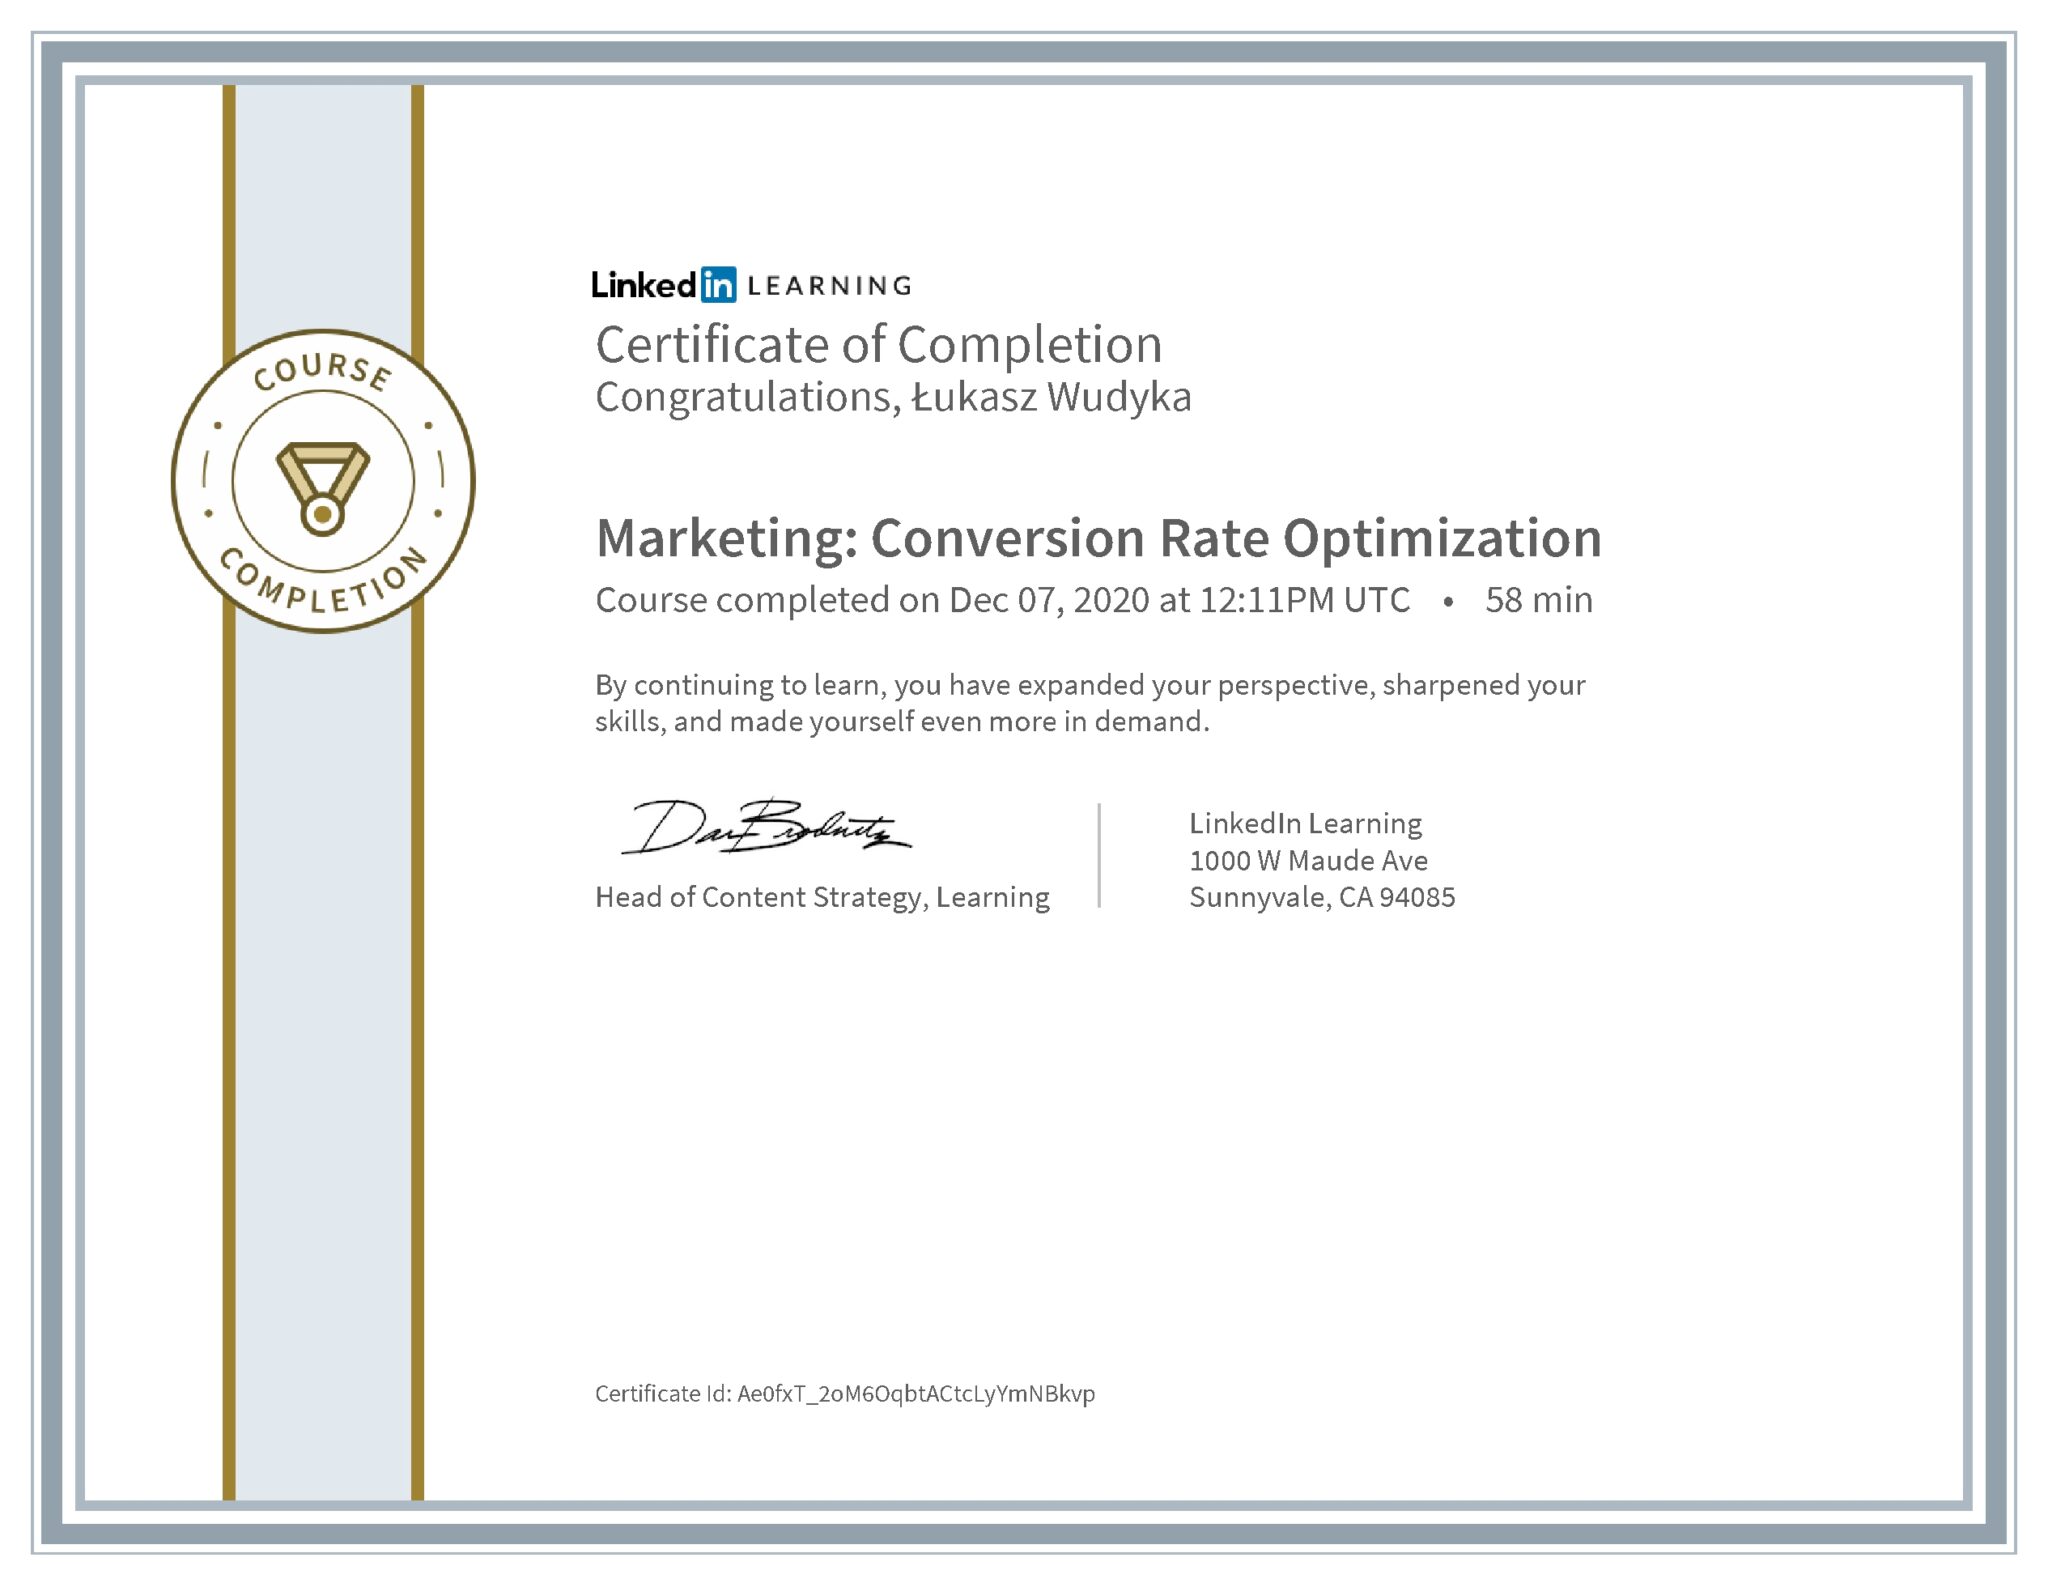 Łukasz Wudyka certyfikat LinkedIn Marketing: Conversion Rate Optimization